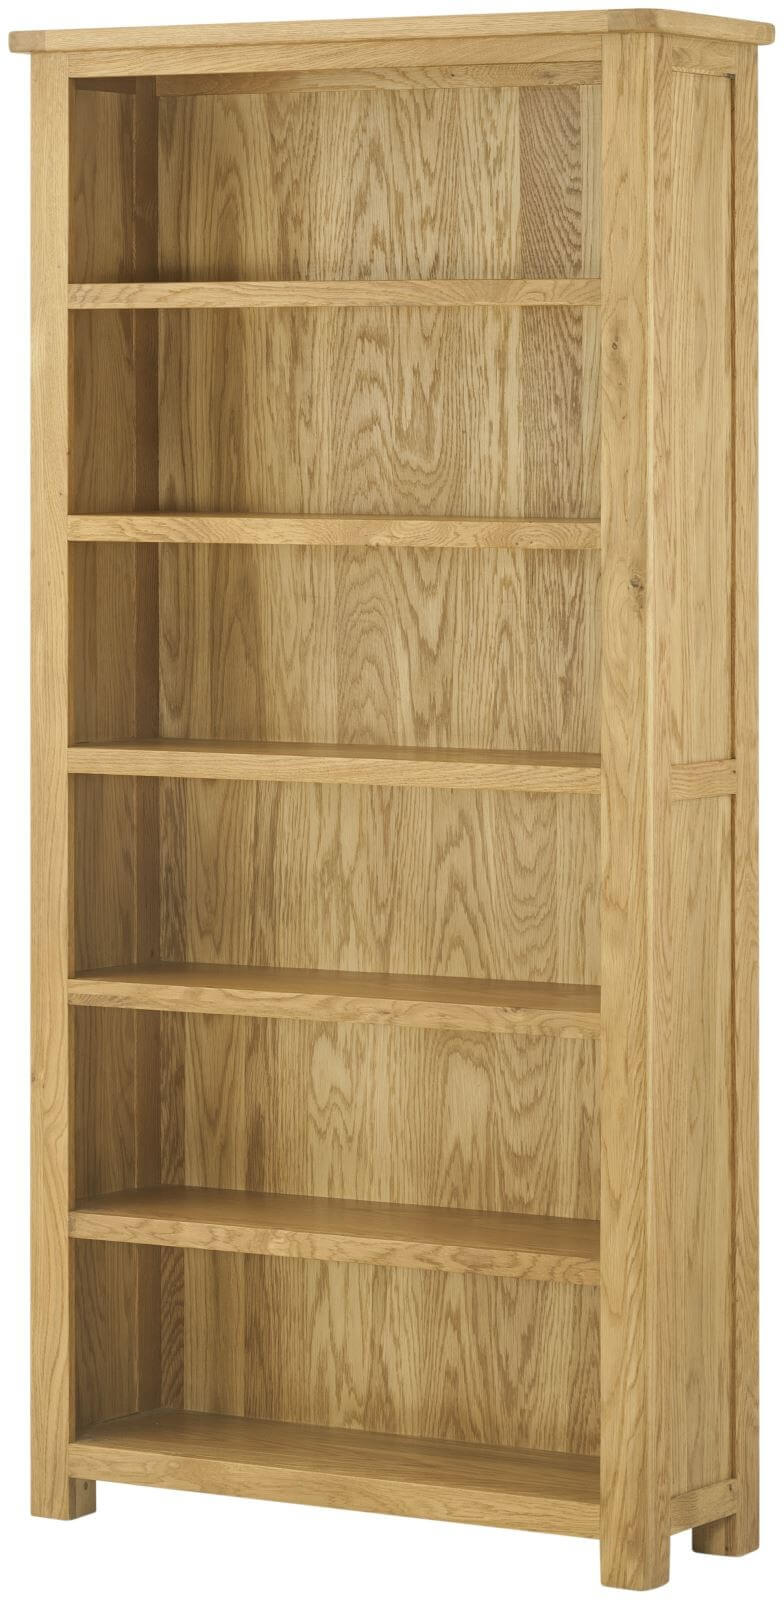 Showing image for Large seattle bookcase - oak